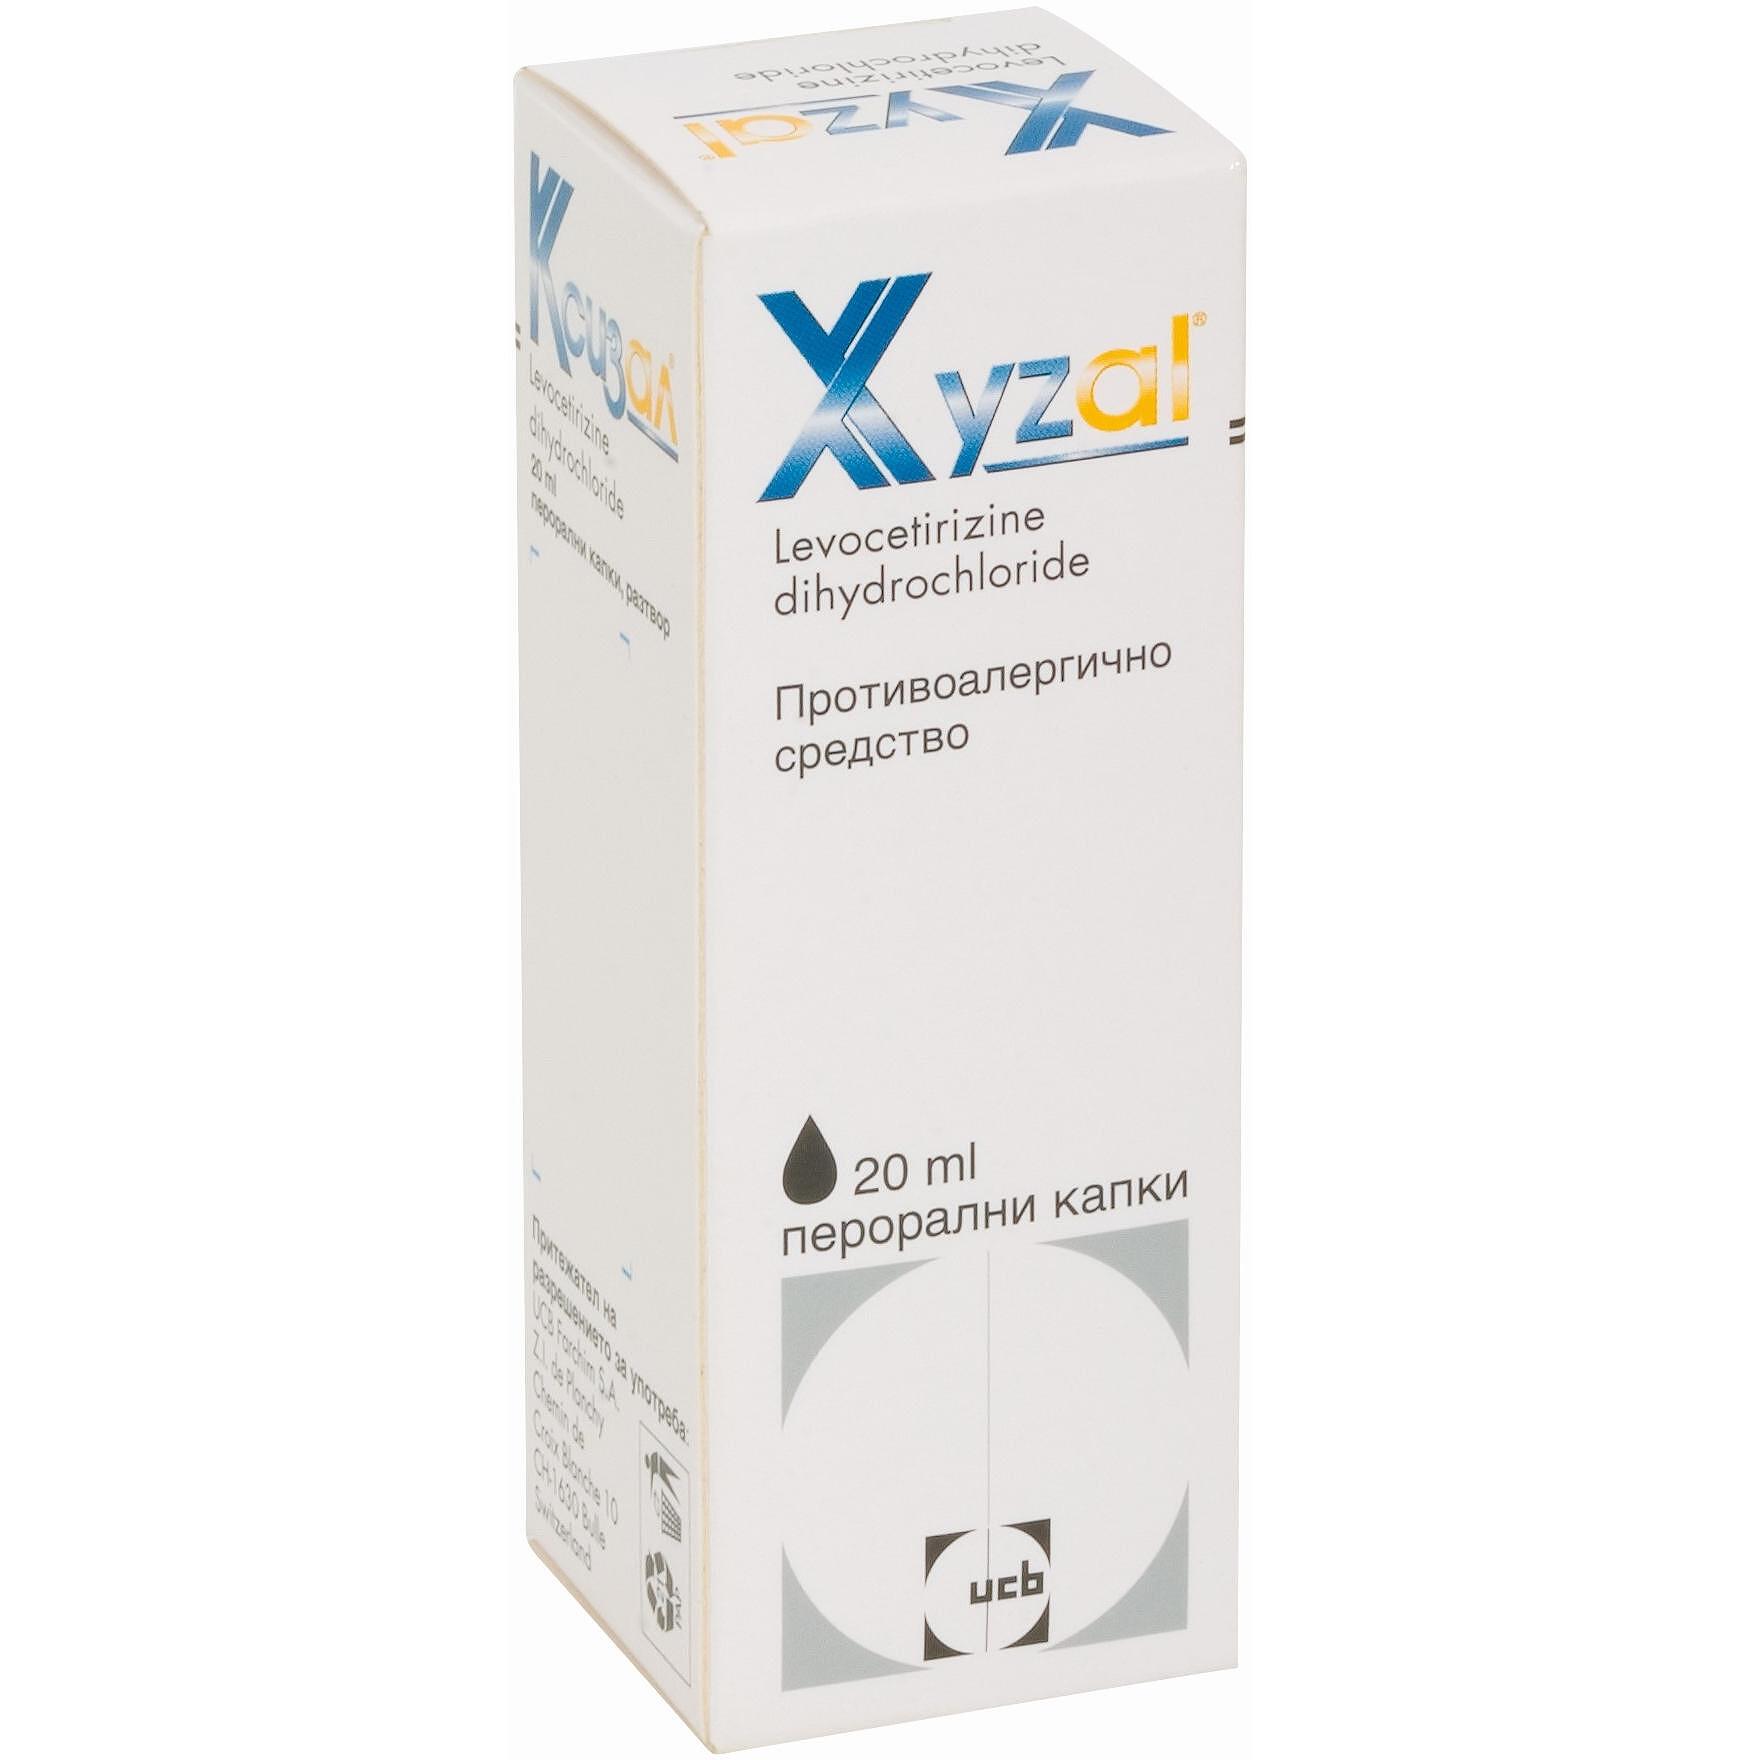 Ксизал капки противоалергично средство, 5 мг, 20 мл | Xyzal, Ю Си Би .